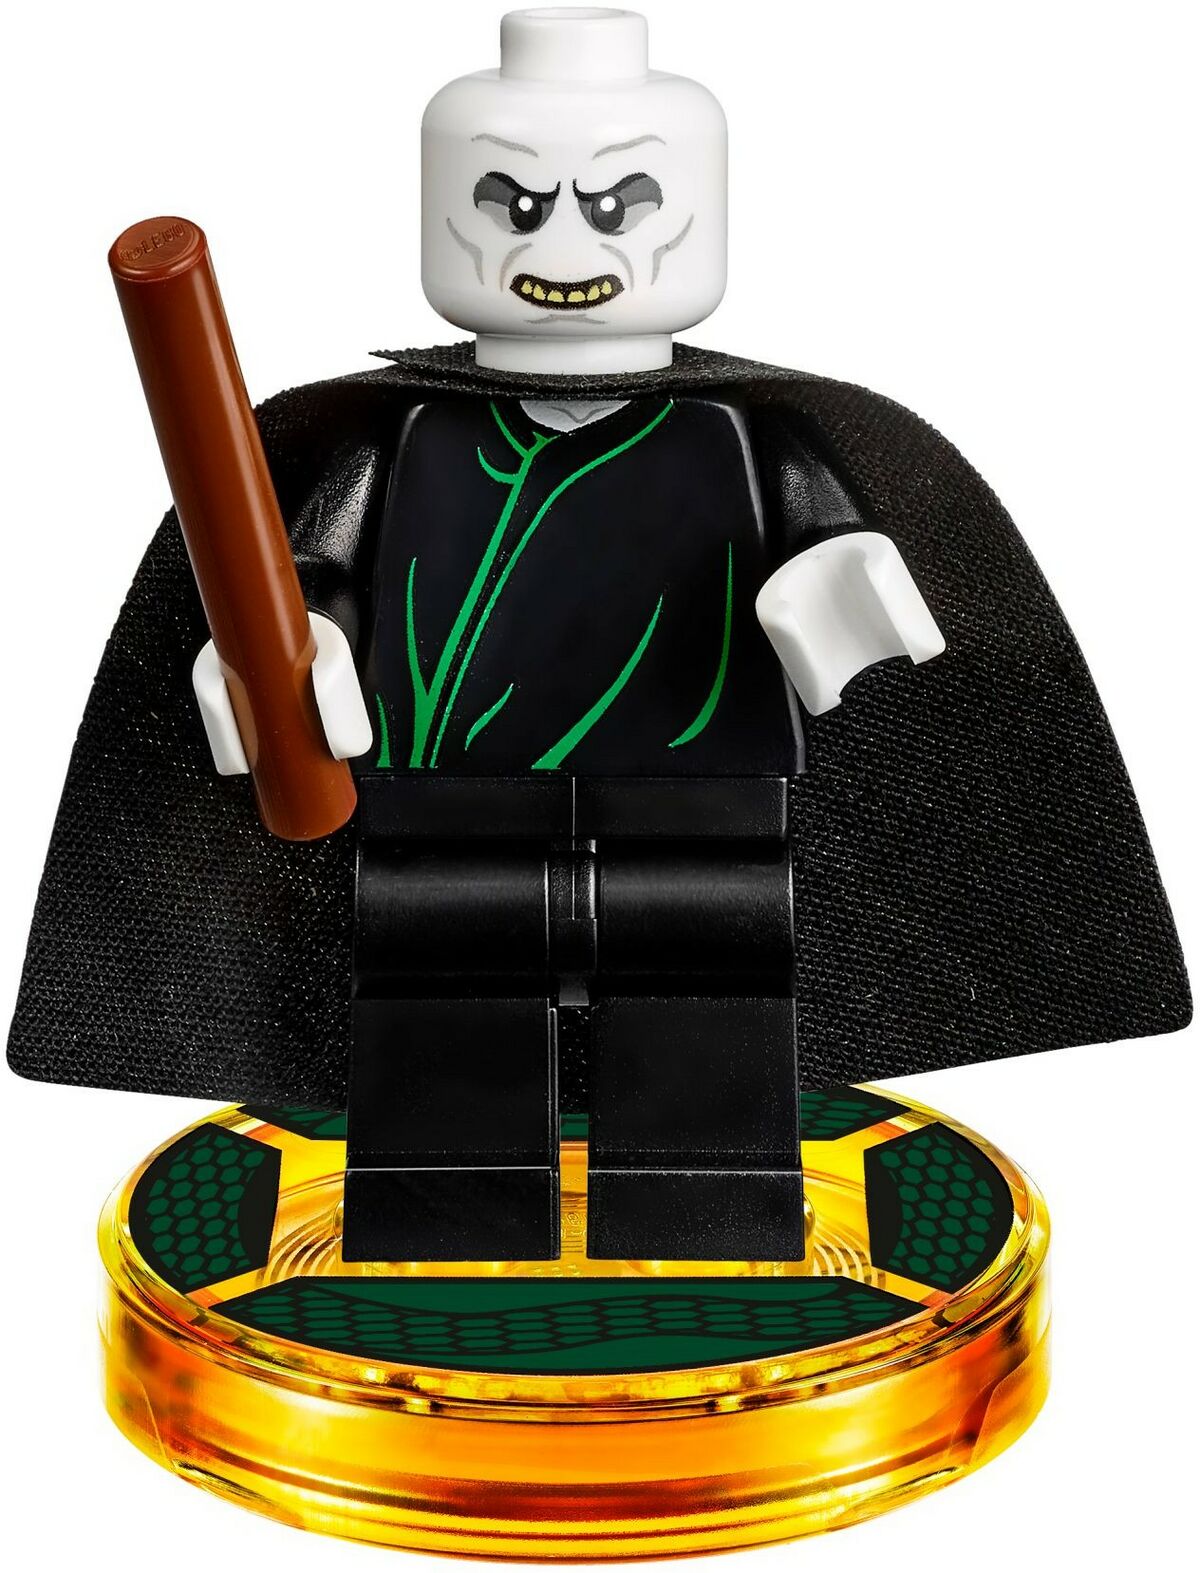 Lord Voldemort - Brickipedia, the LEGO Wiki